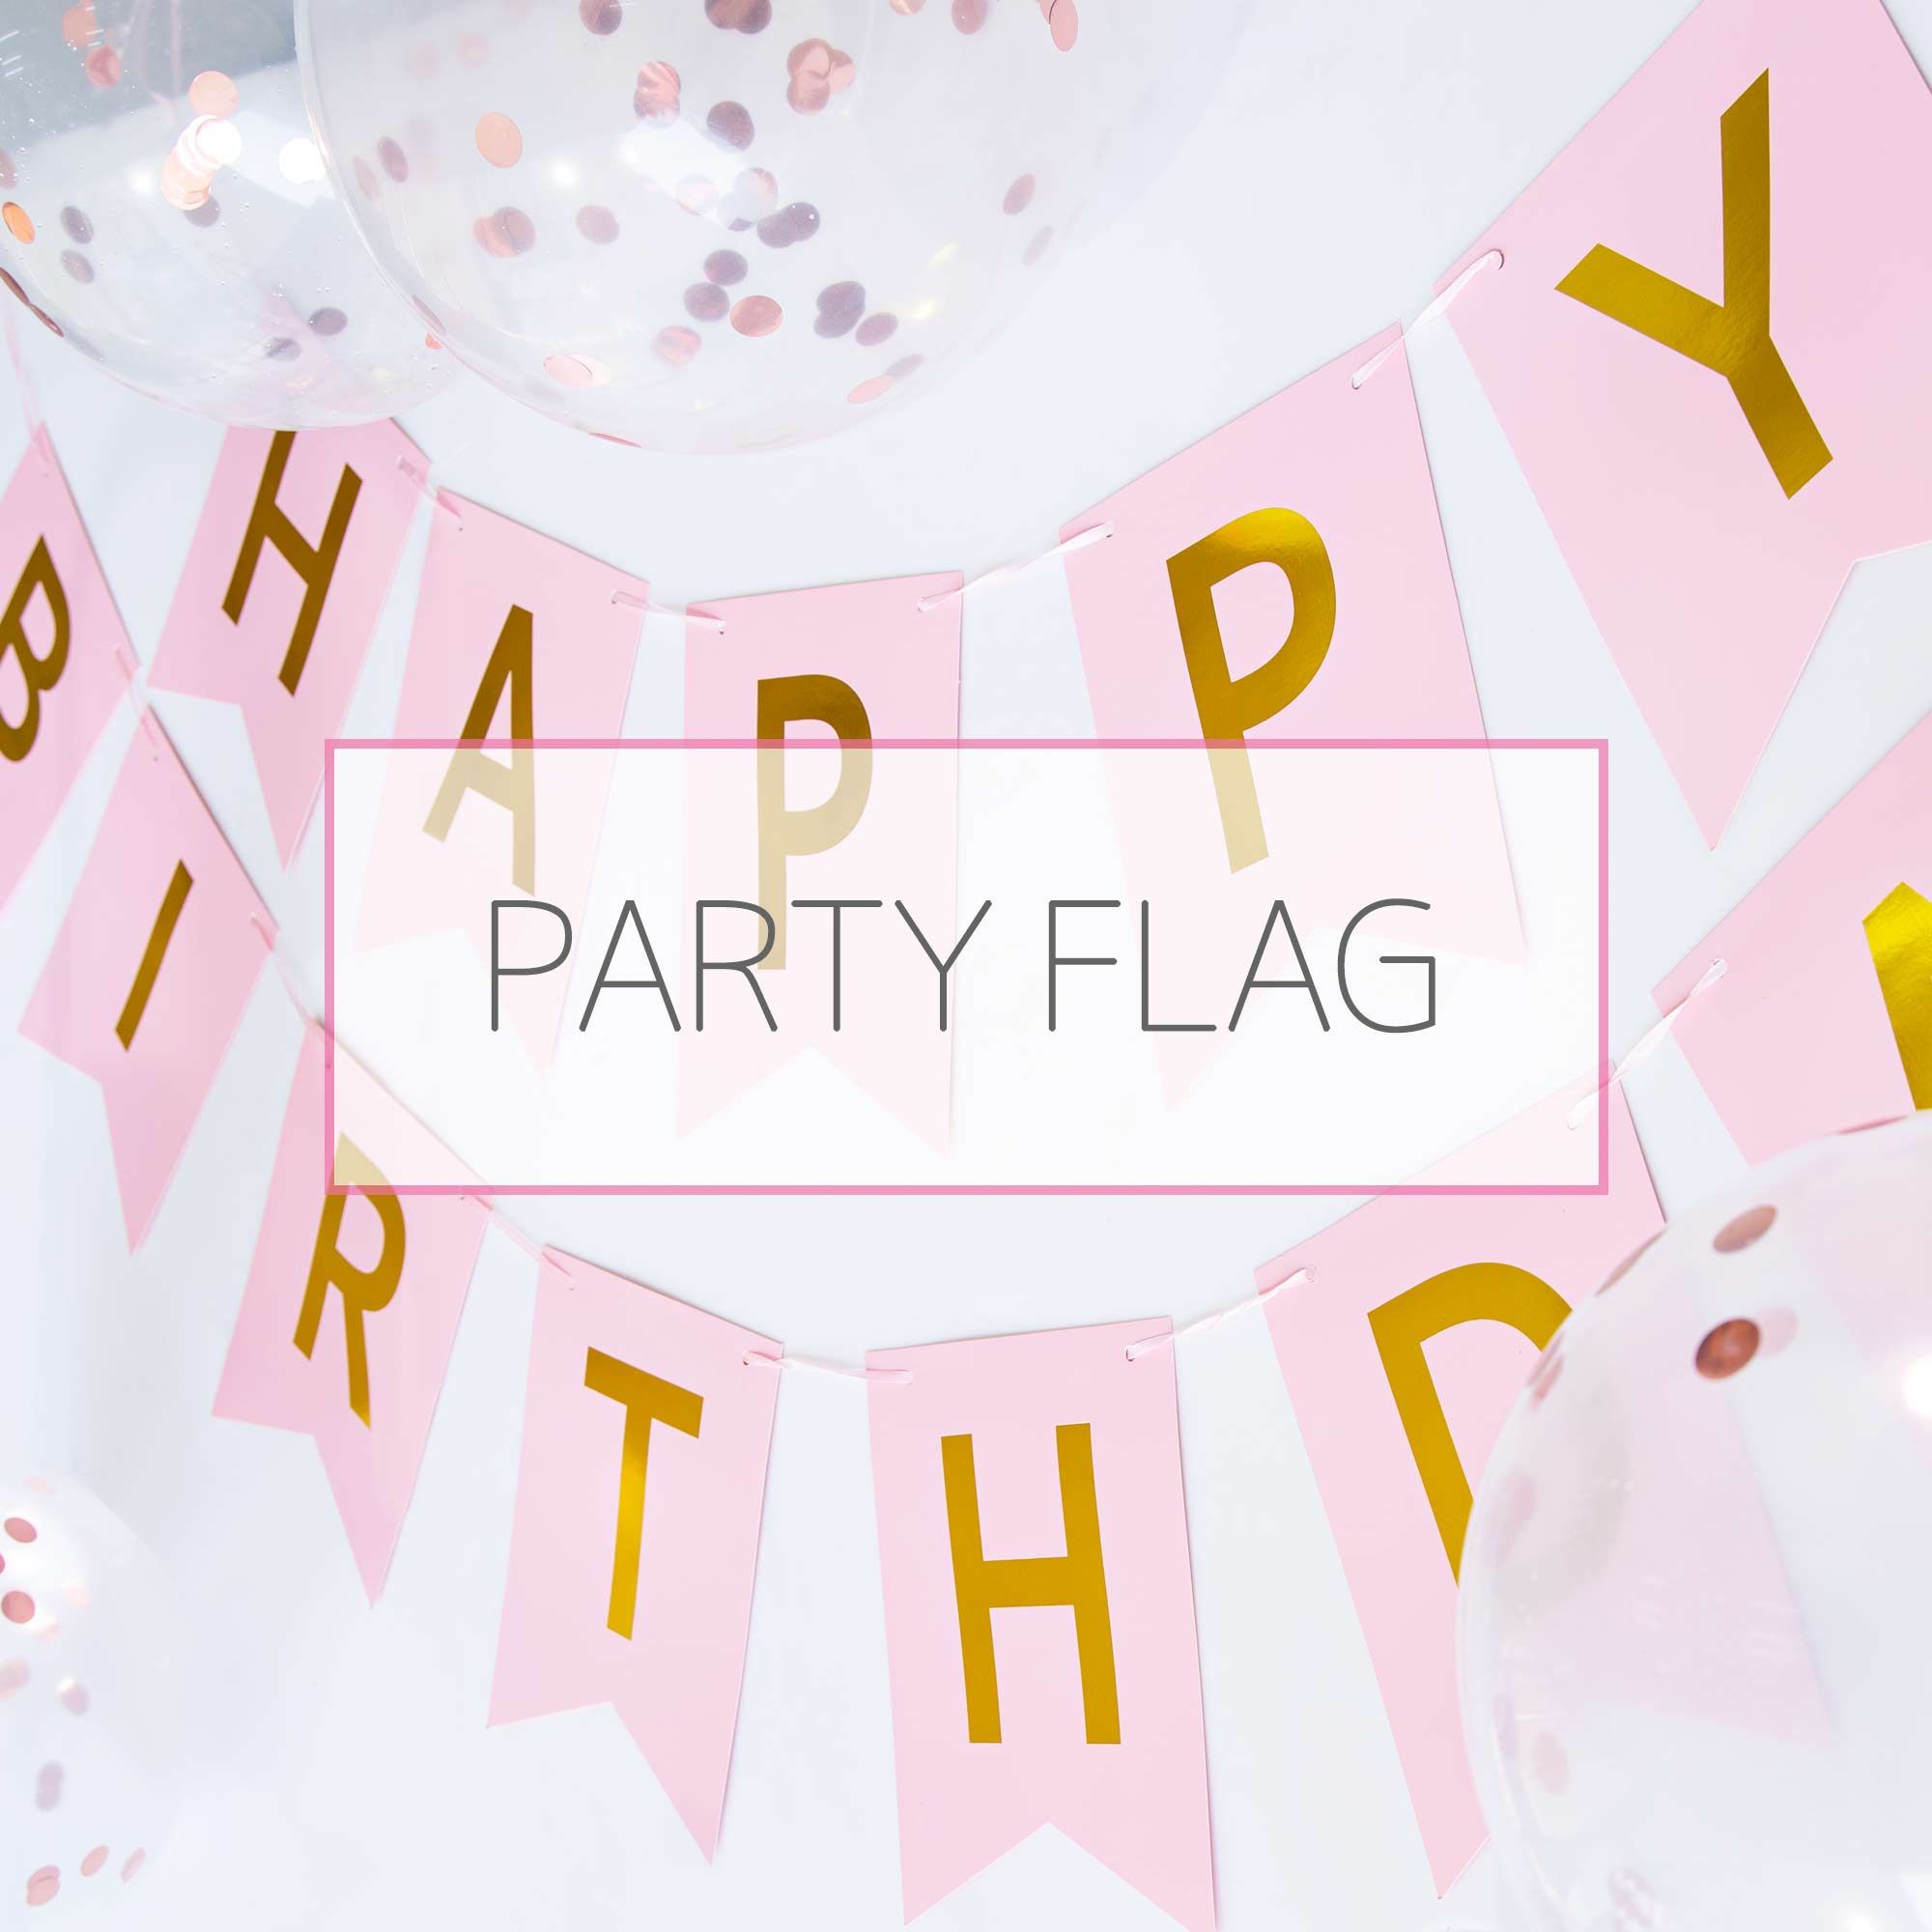 Bandeira do partido - Banner HBD para festa de aniversário